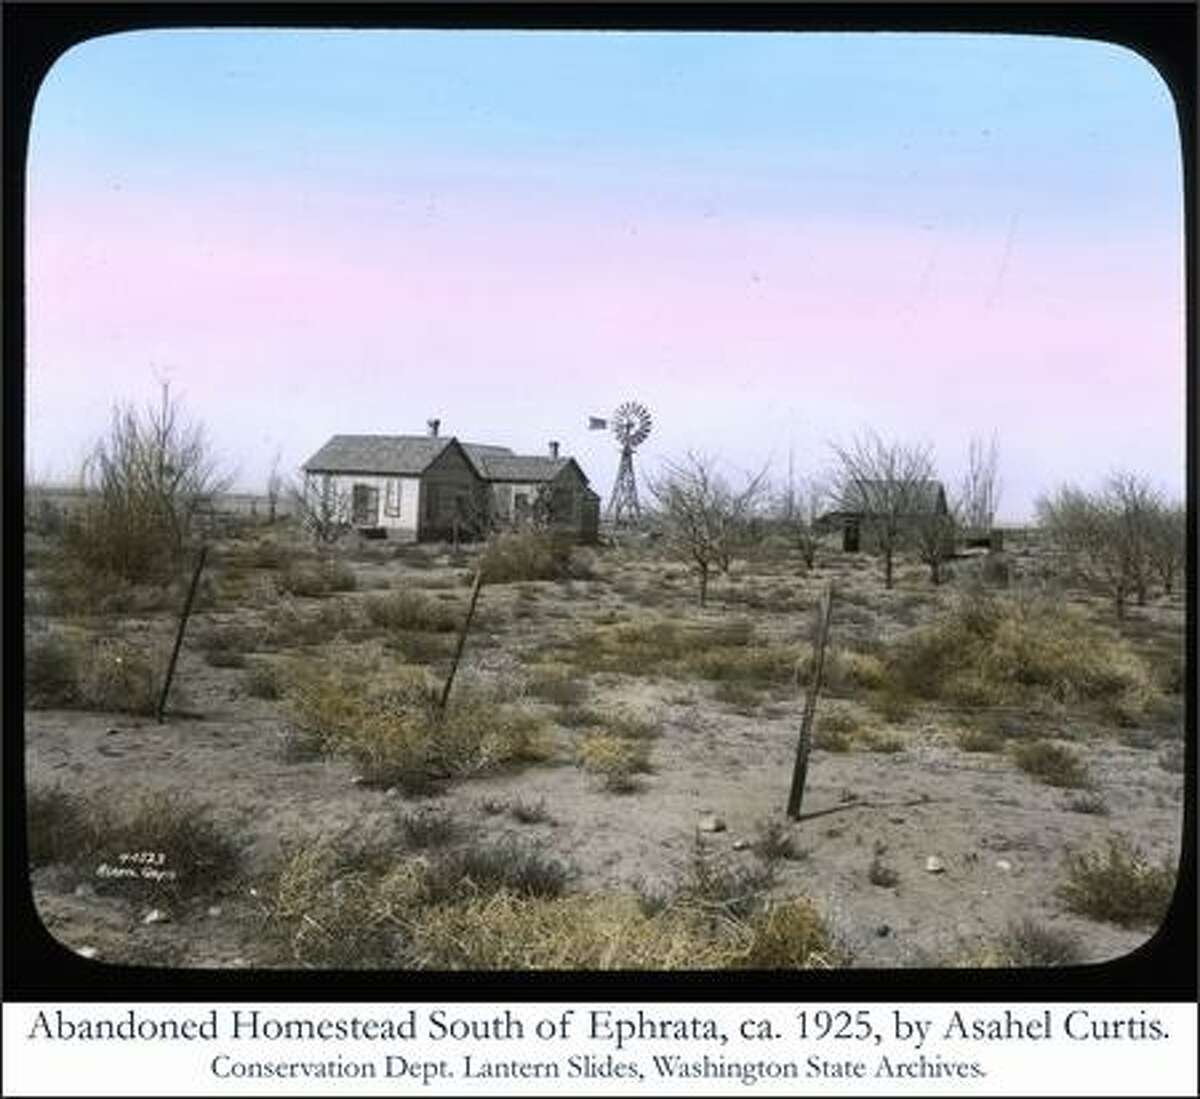 Abandoned homestead southwest of Euphrata, ca. 1925, Photo by Asahel Curtis. Conservation Dept. Lantern Slides, Washington State Archives.